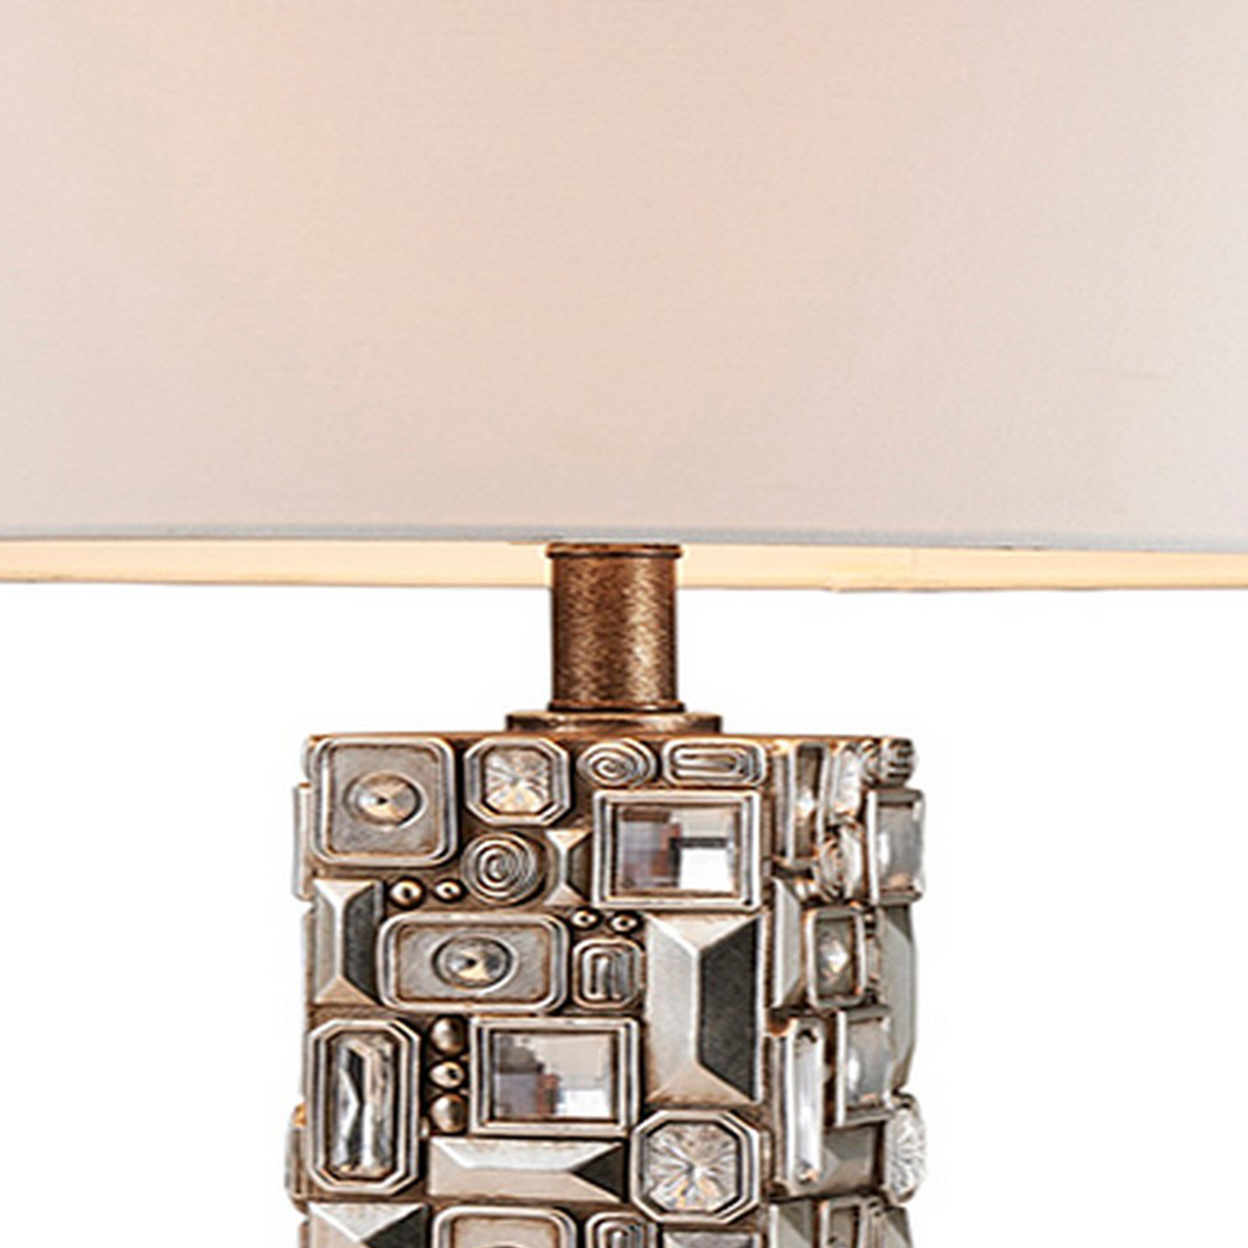 Table Lamp With Abstract Mirror Block Base, Bronze- Saltoro Sherpi